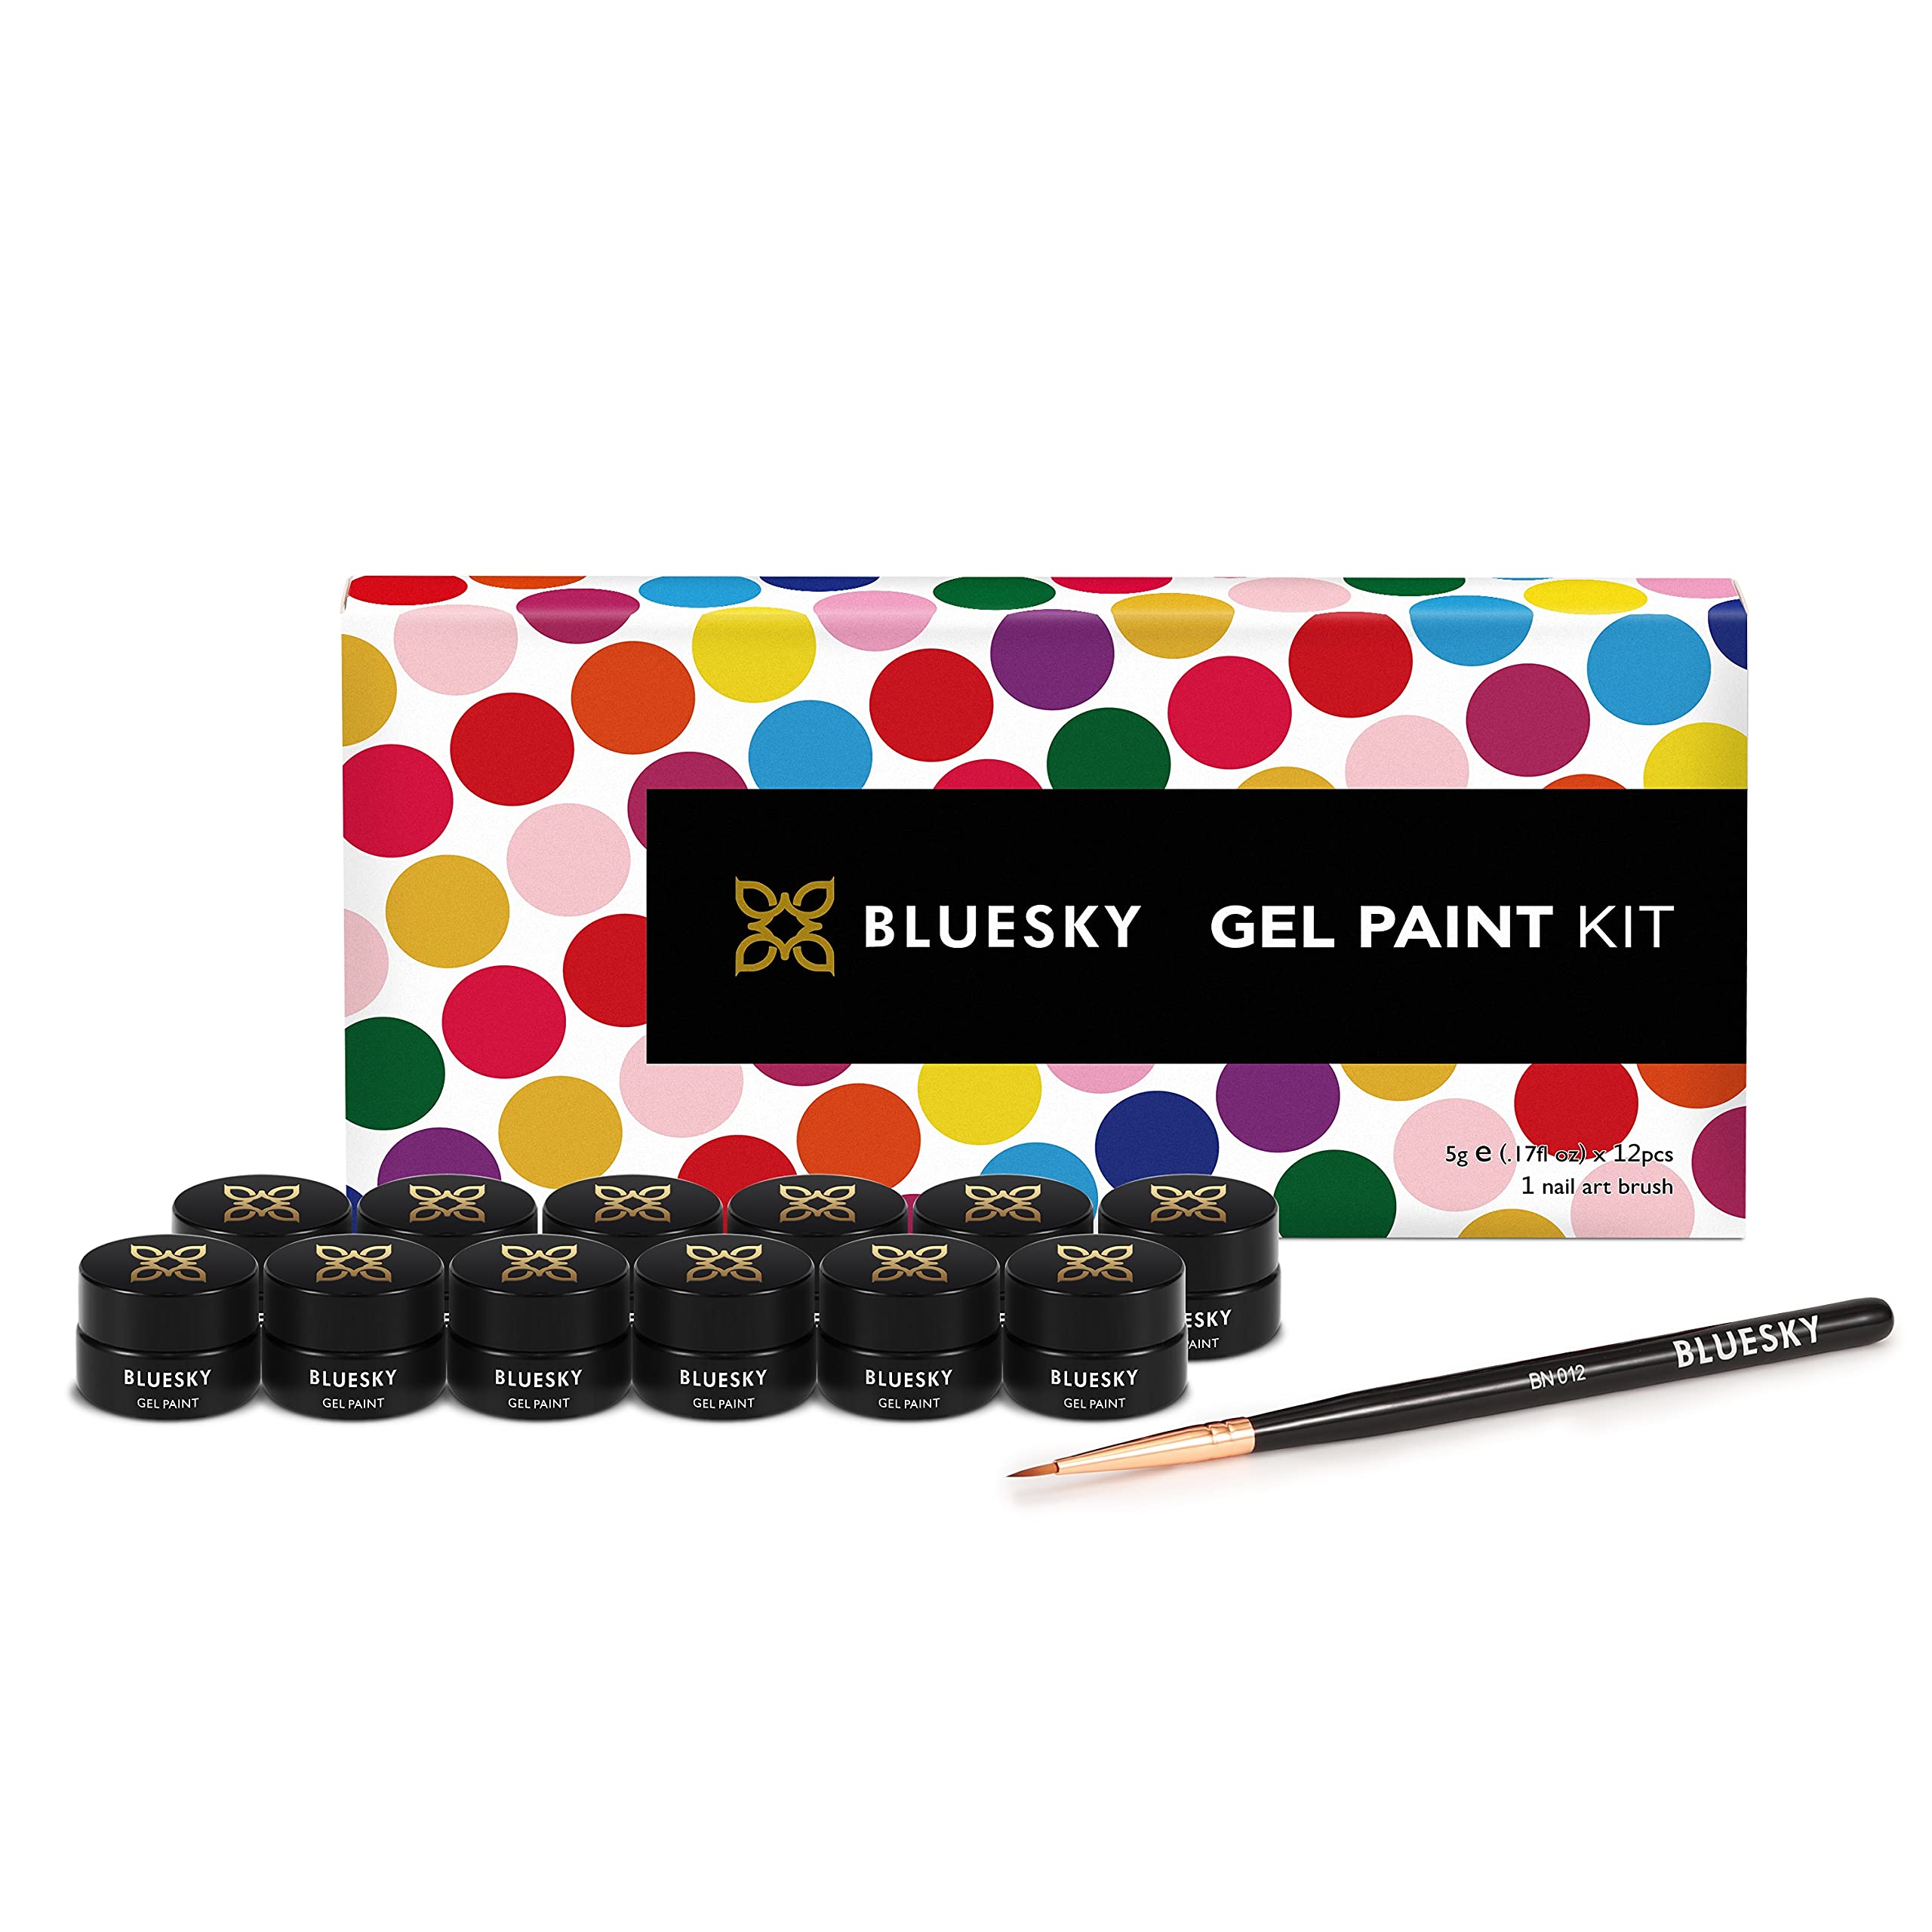 Bluesky Gel Paint Kit, Includes x 12 Gel Paints for Nail Art, Gel Polish for Nail Art